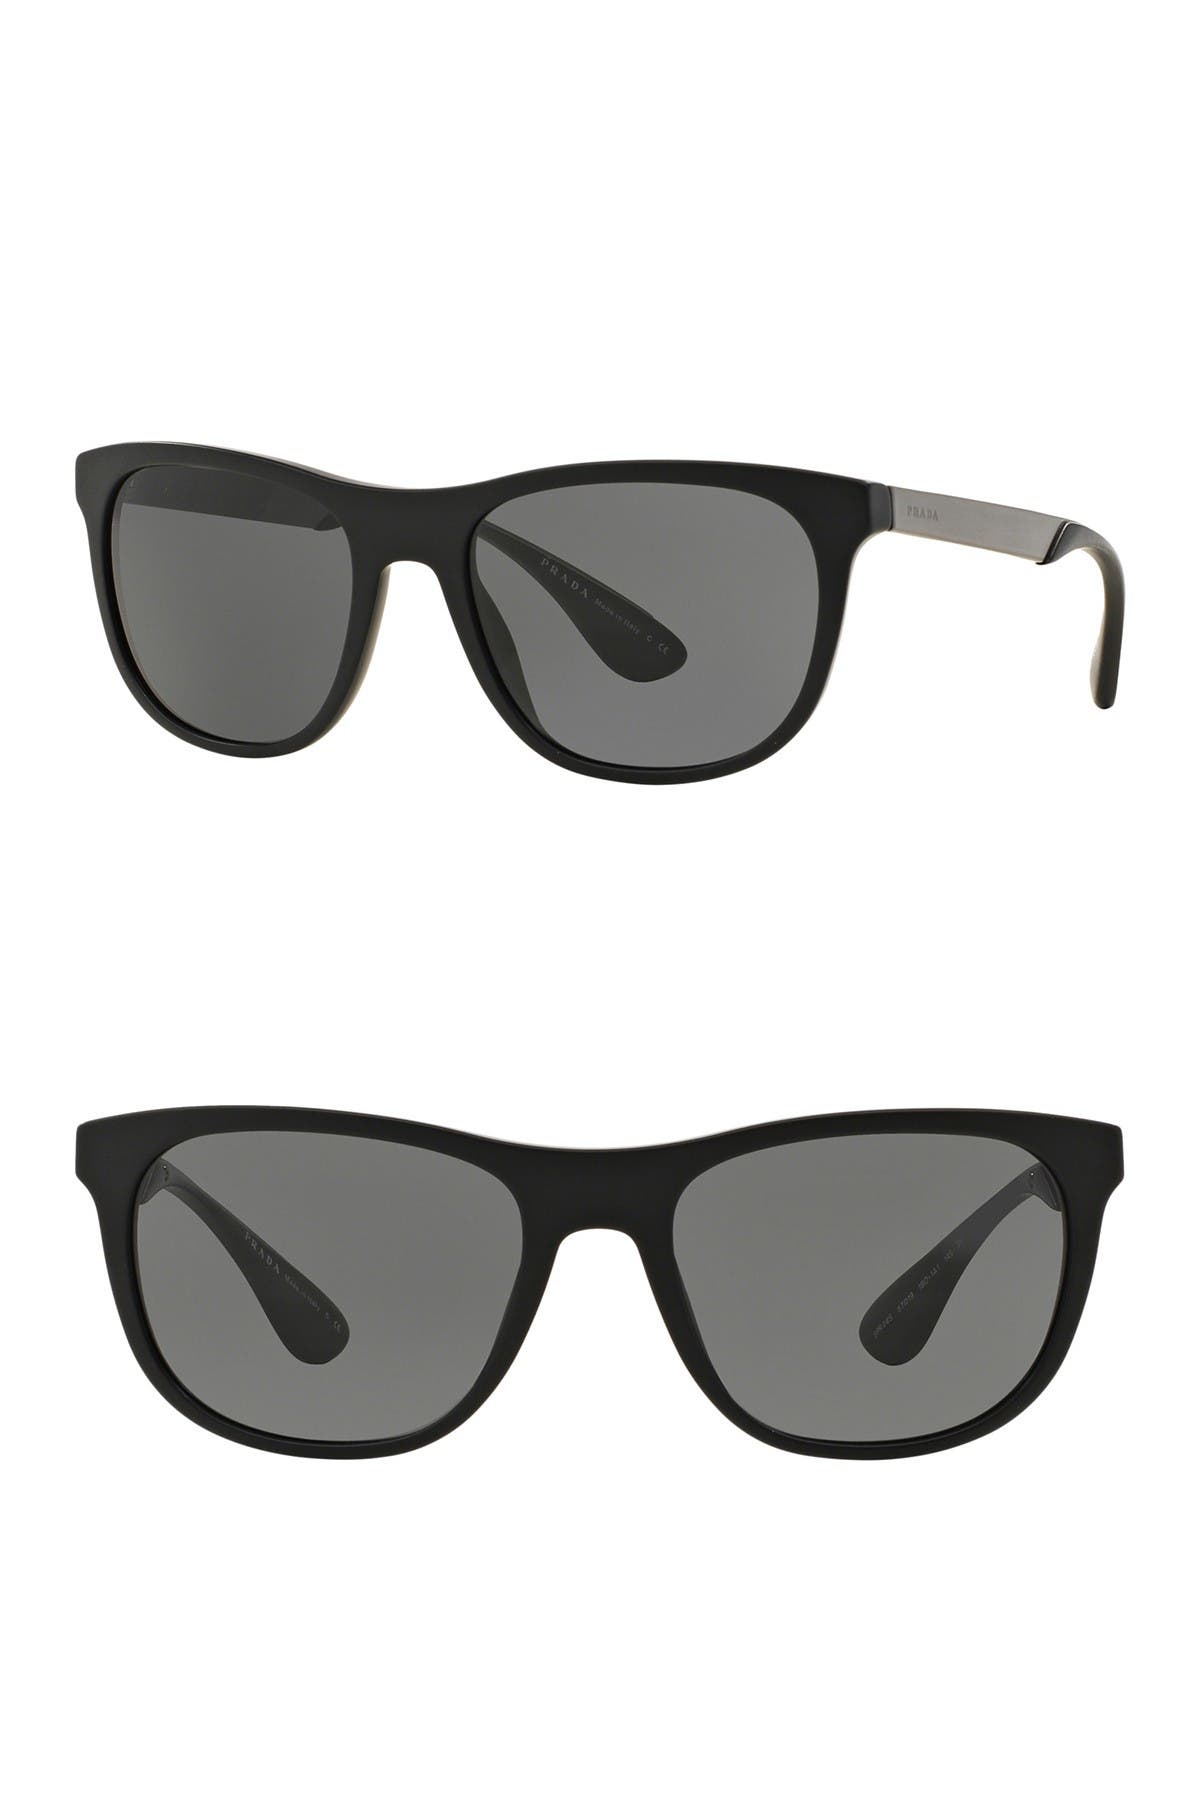 Prada | 57mm Rectangular Sunglasses 